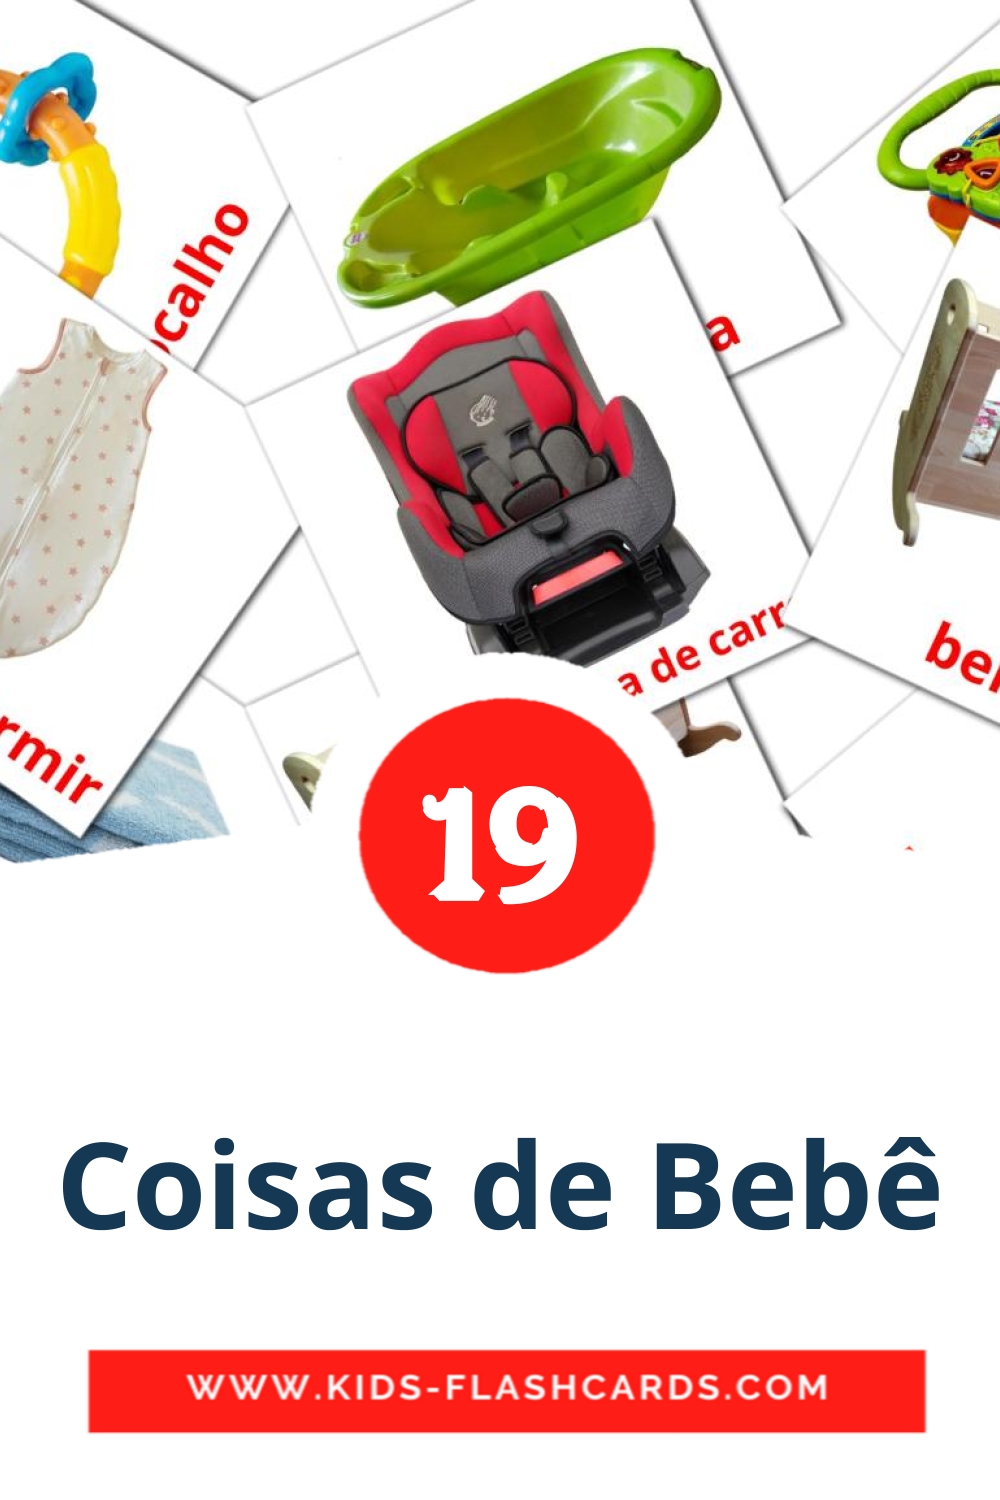 19 Coisas de Bebê Picture Cards for Kindergarden in portuguese